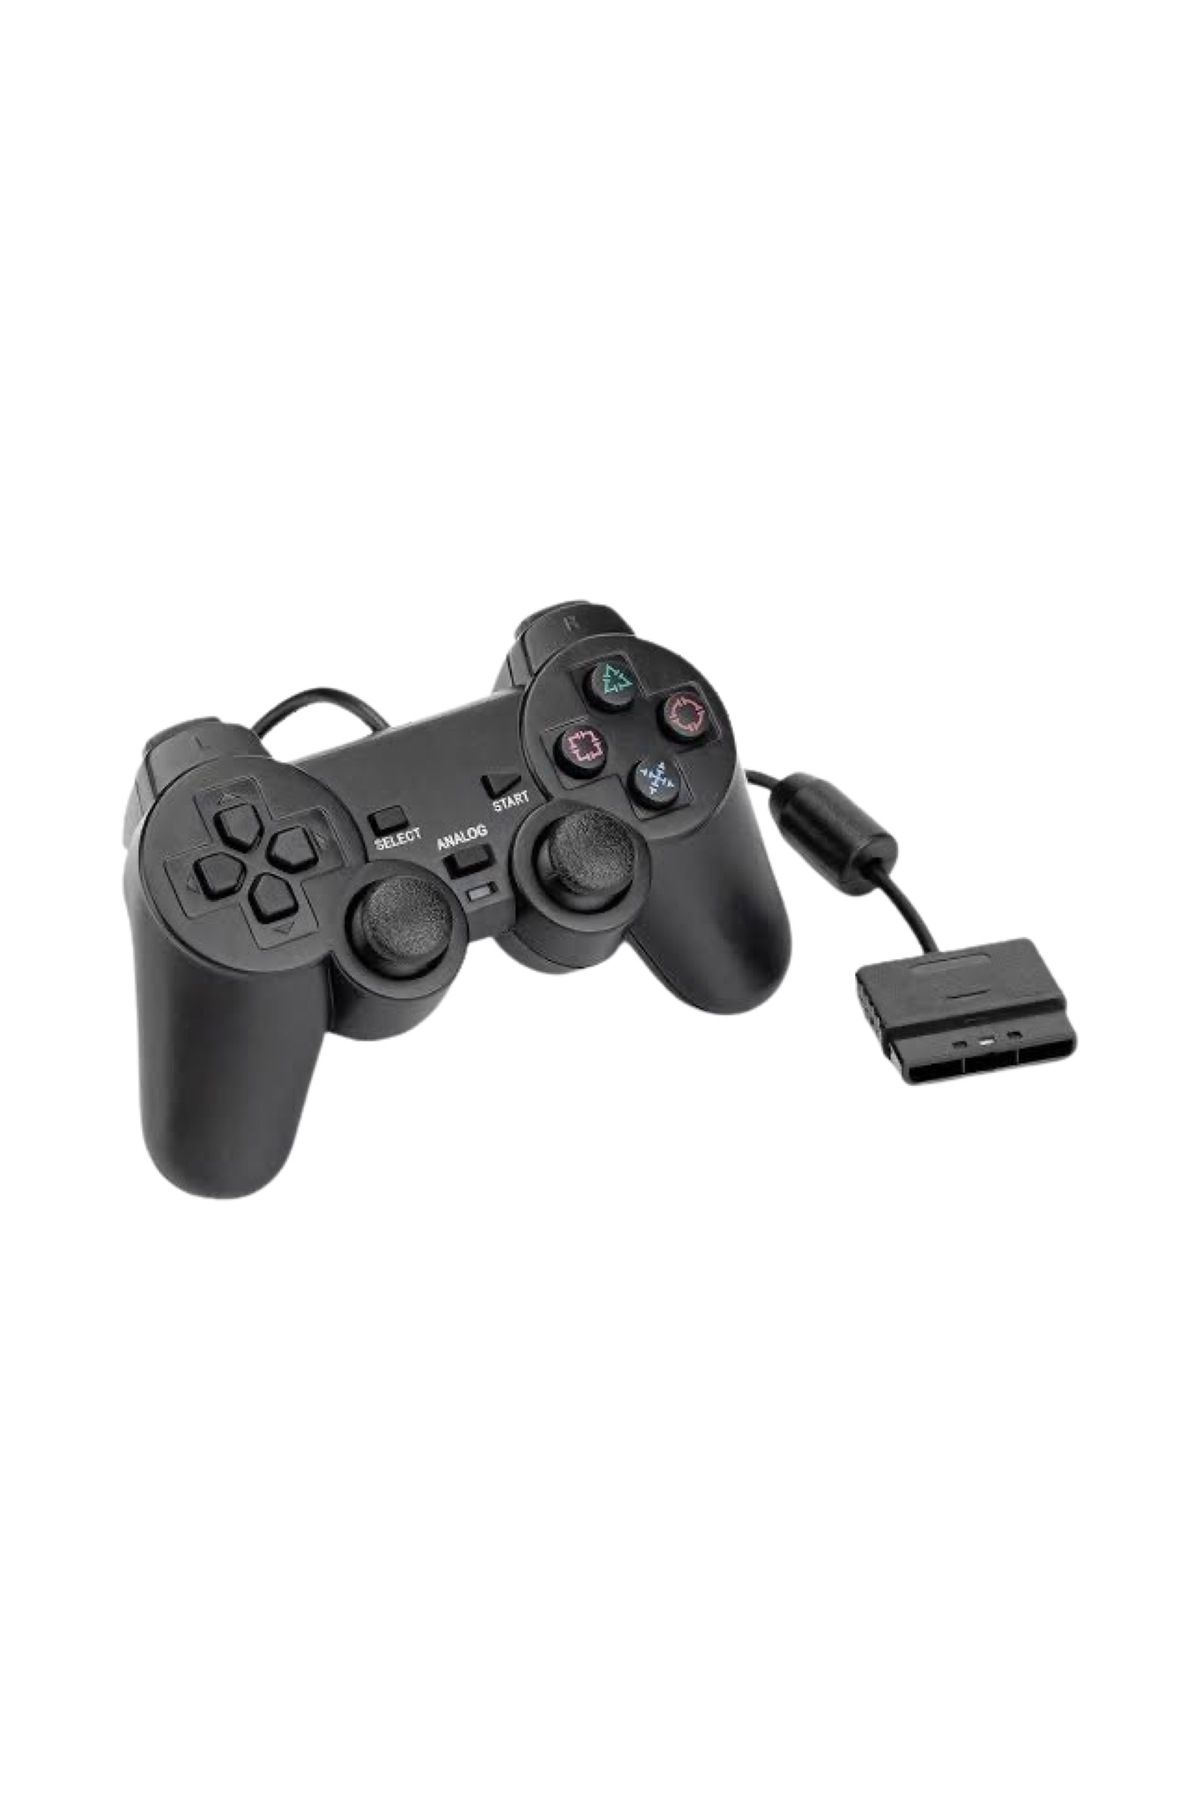 YUES Playstation 2 Uyumlu Joystick Oyun Kolu Ps2 Controller Kablolu